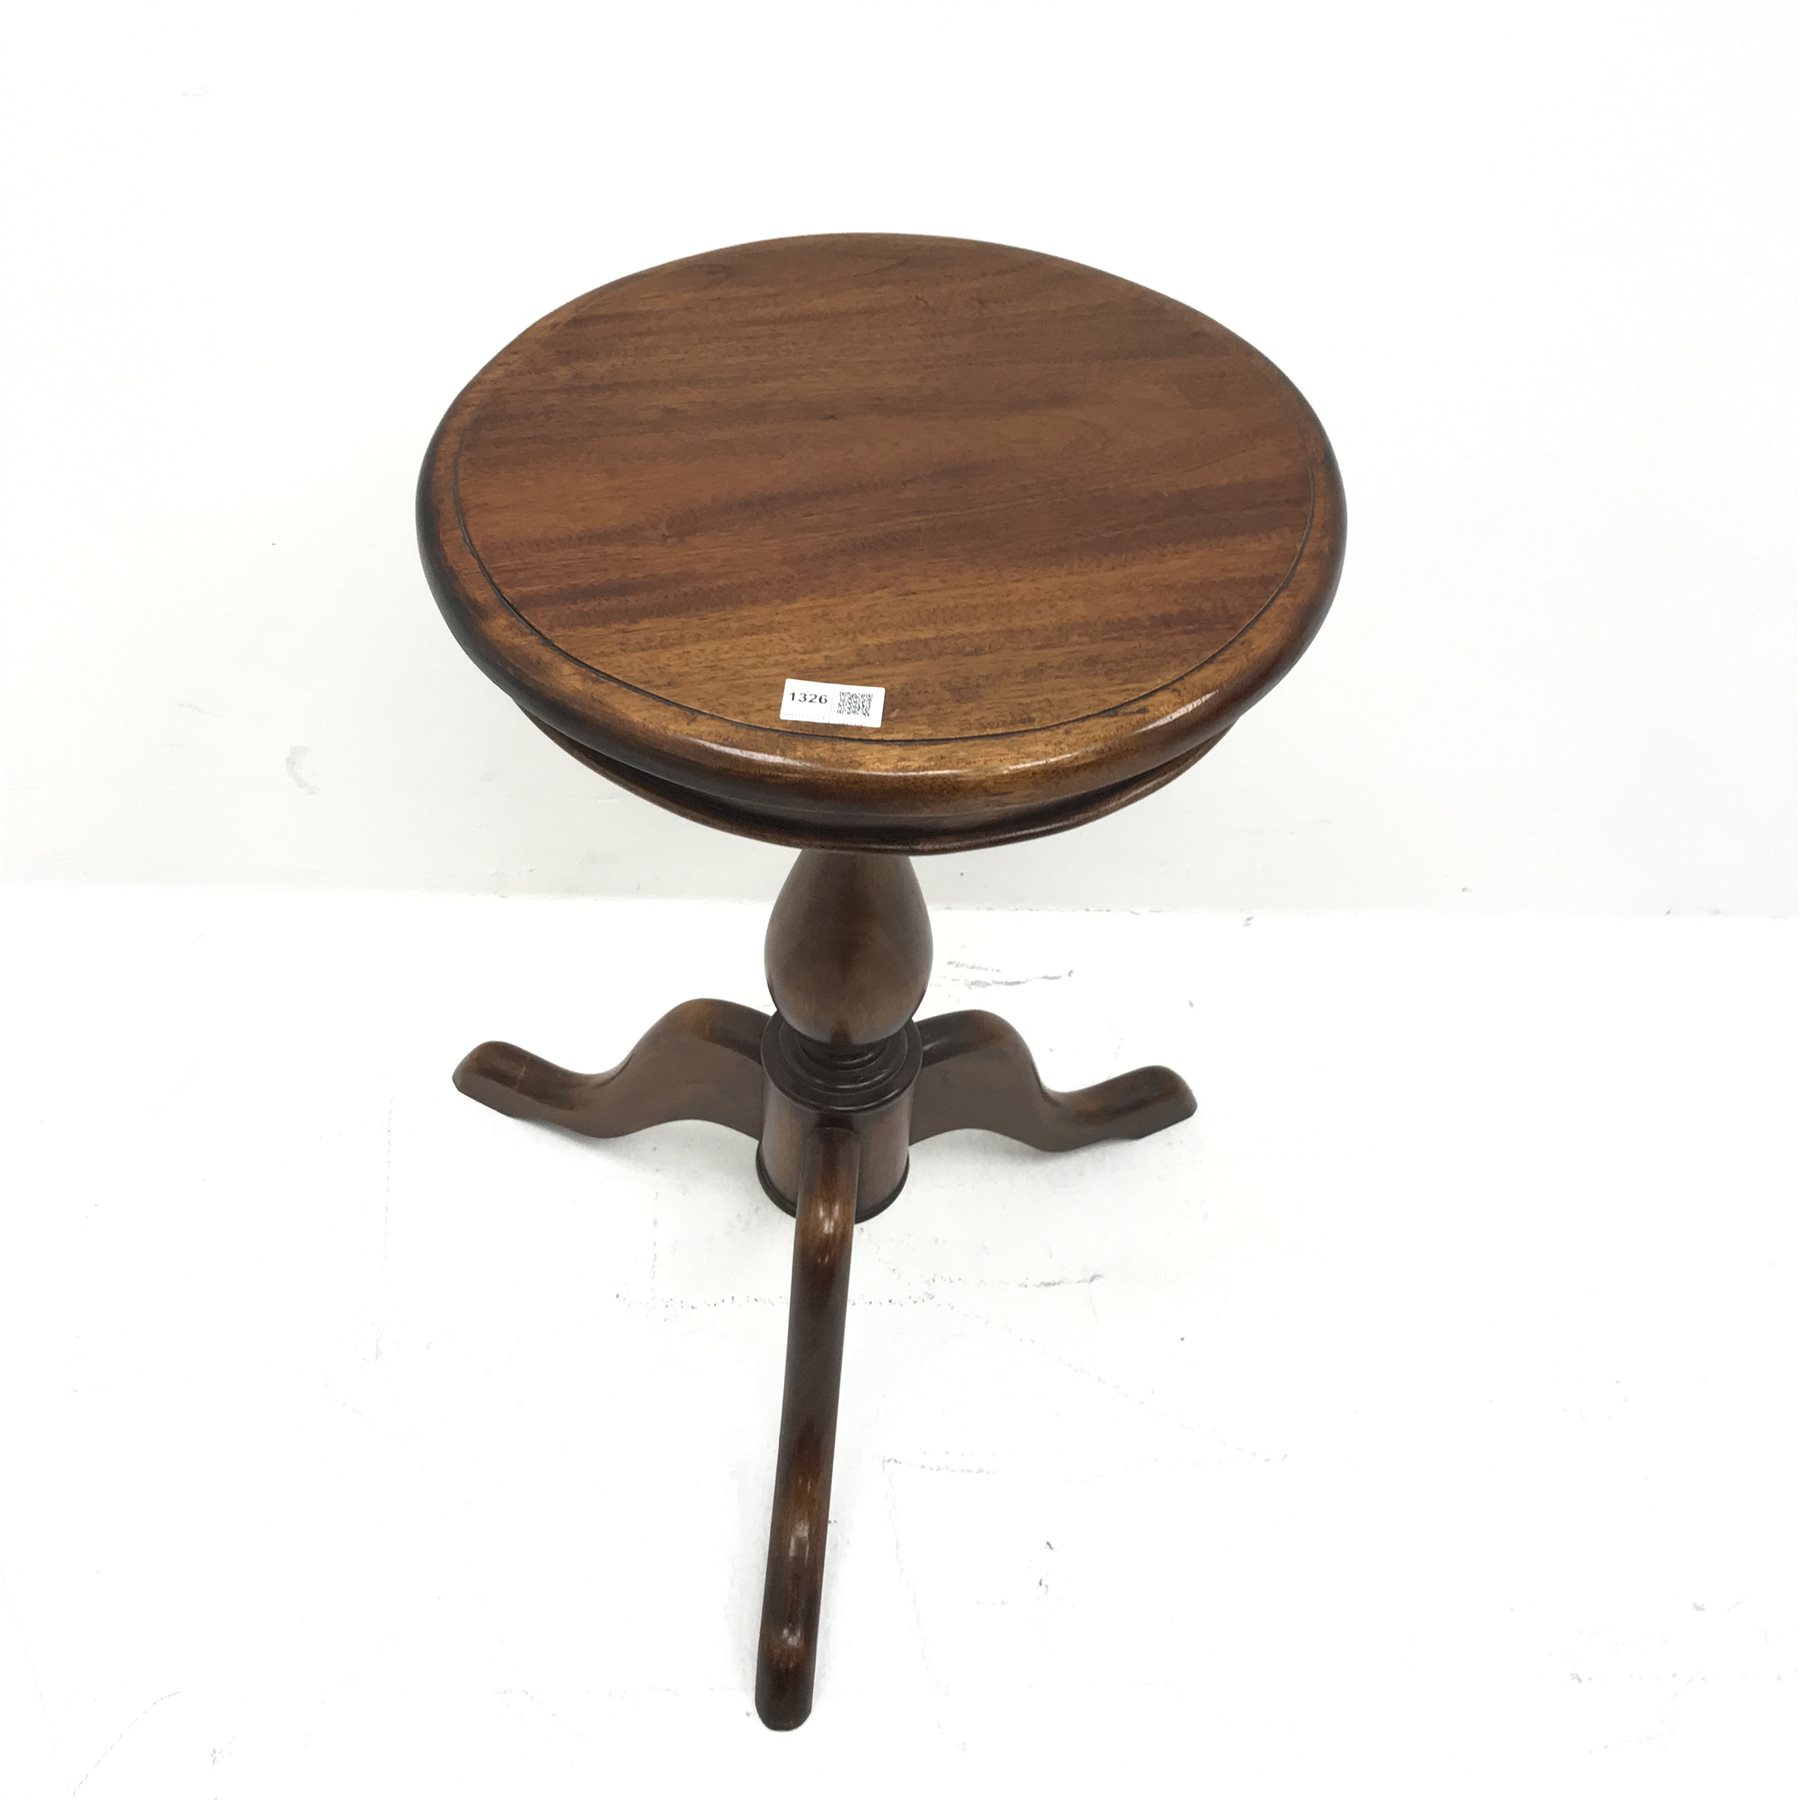 20th century mahogany pedestal table, single turned column on three shaped feet, D40cm, H65cm - Image 2 of 2